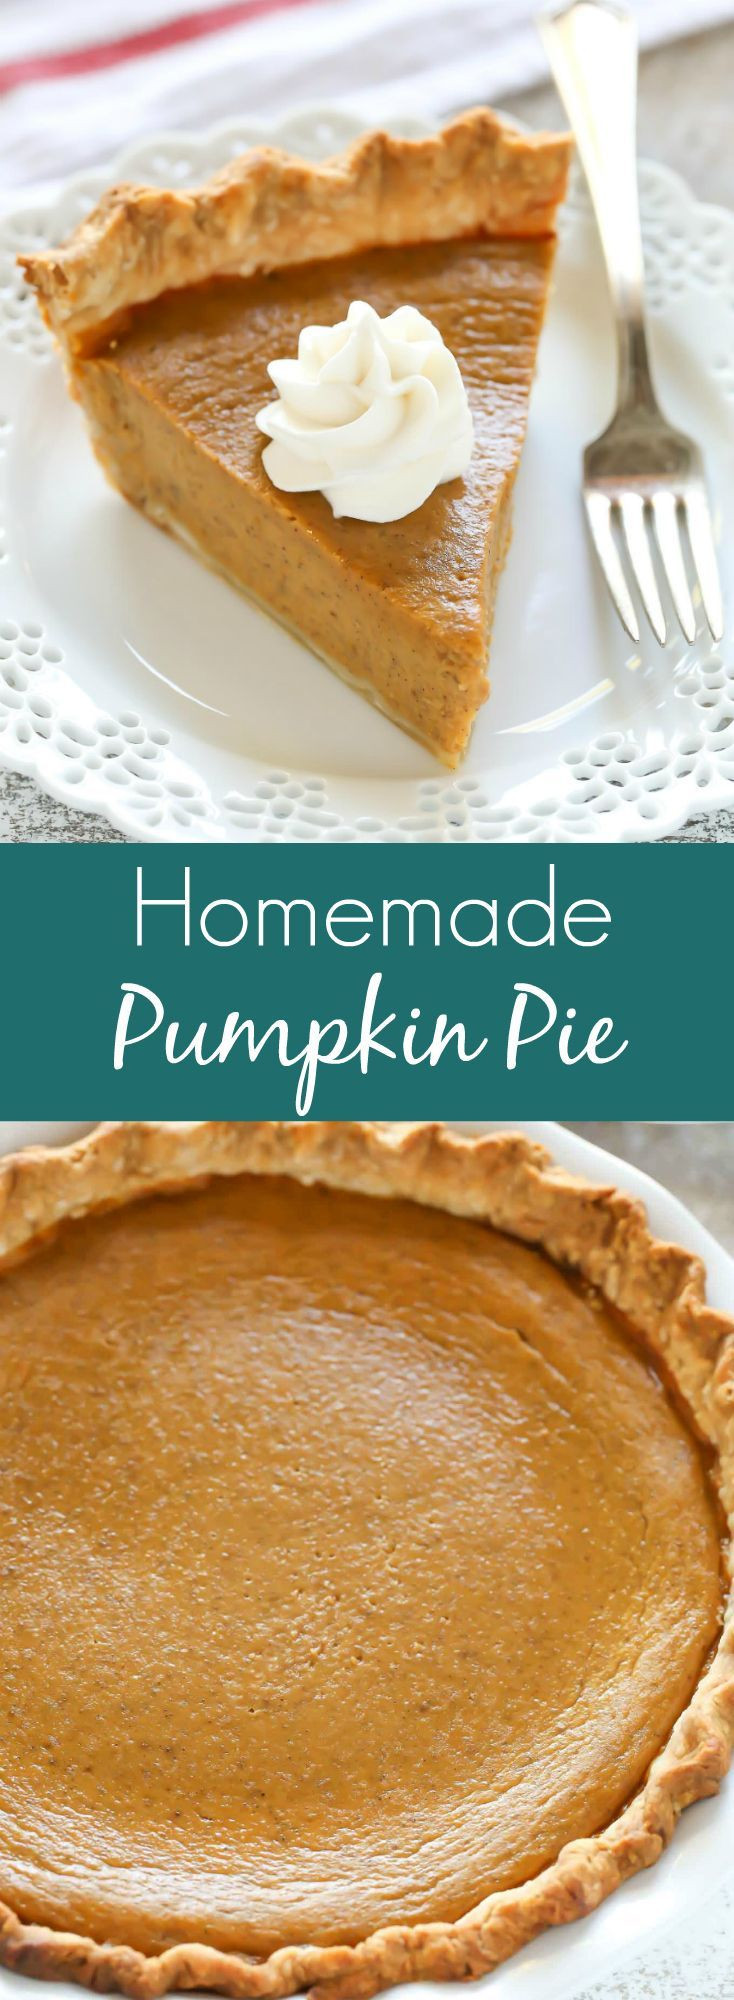 Pumpkin Pie Easy Recipes
 An easy and delicious recipe for Homemade Pumpkin Pie